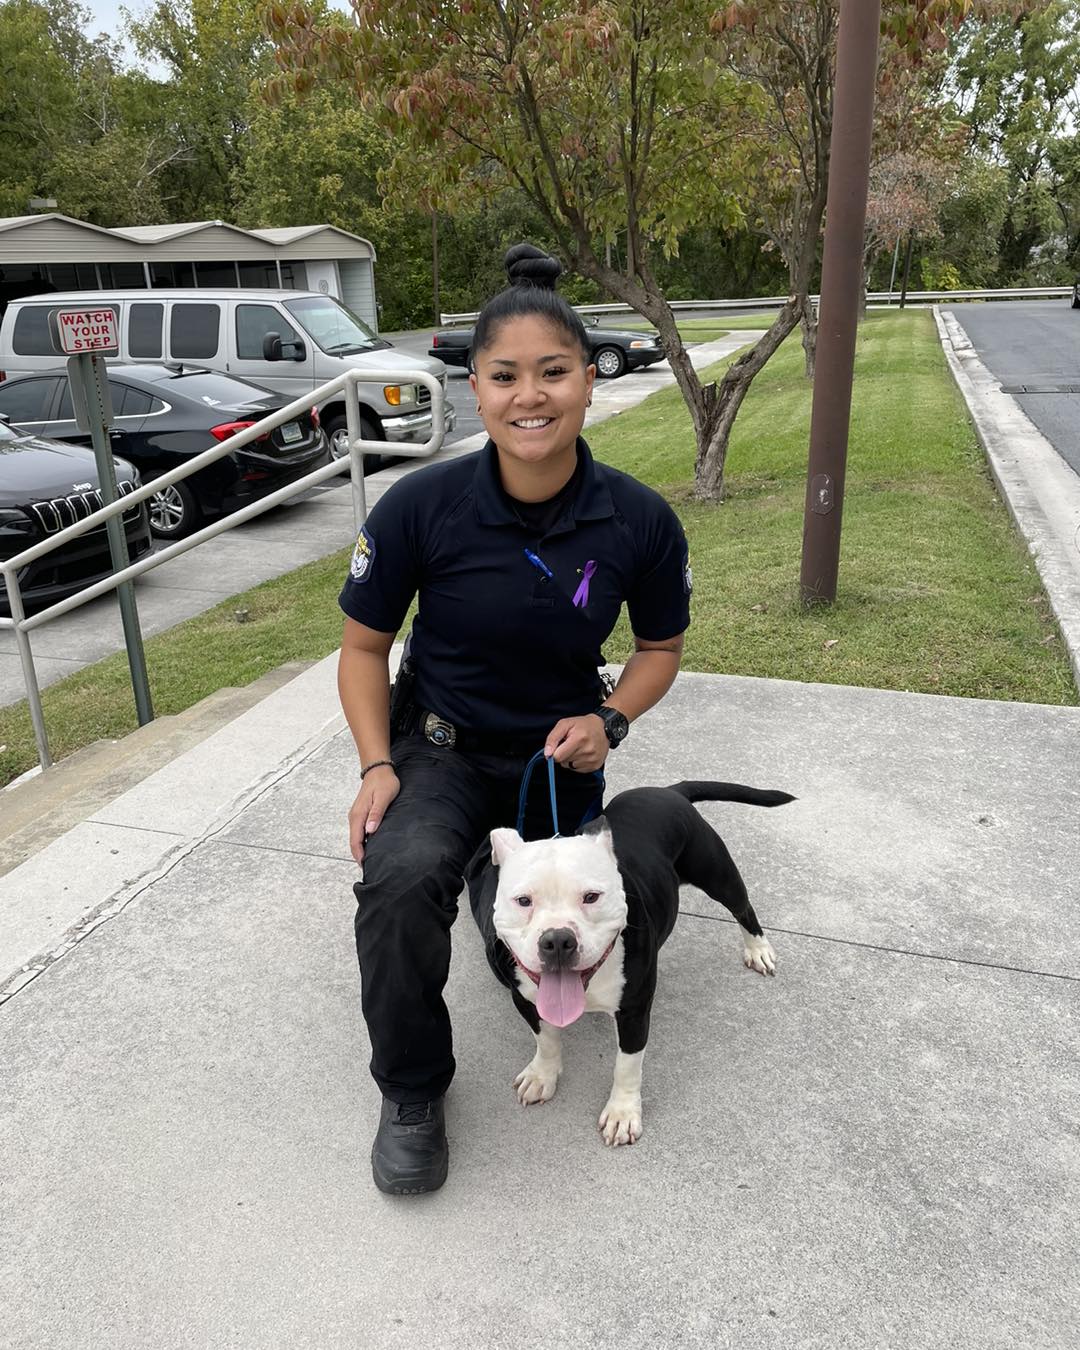 Policewoman holding dog on a leash